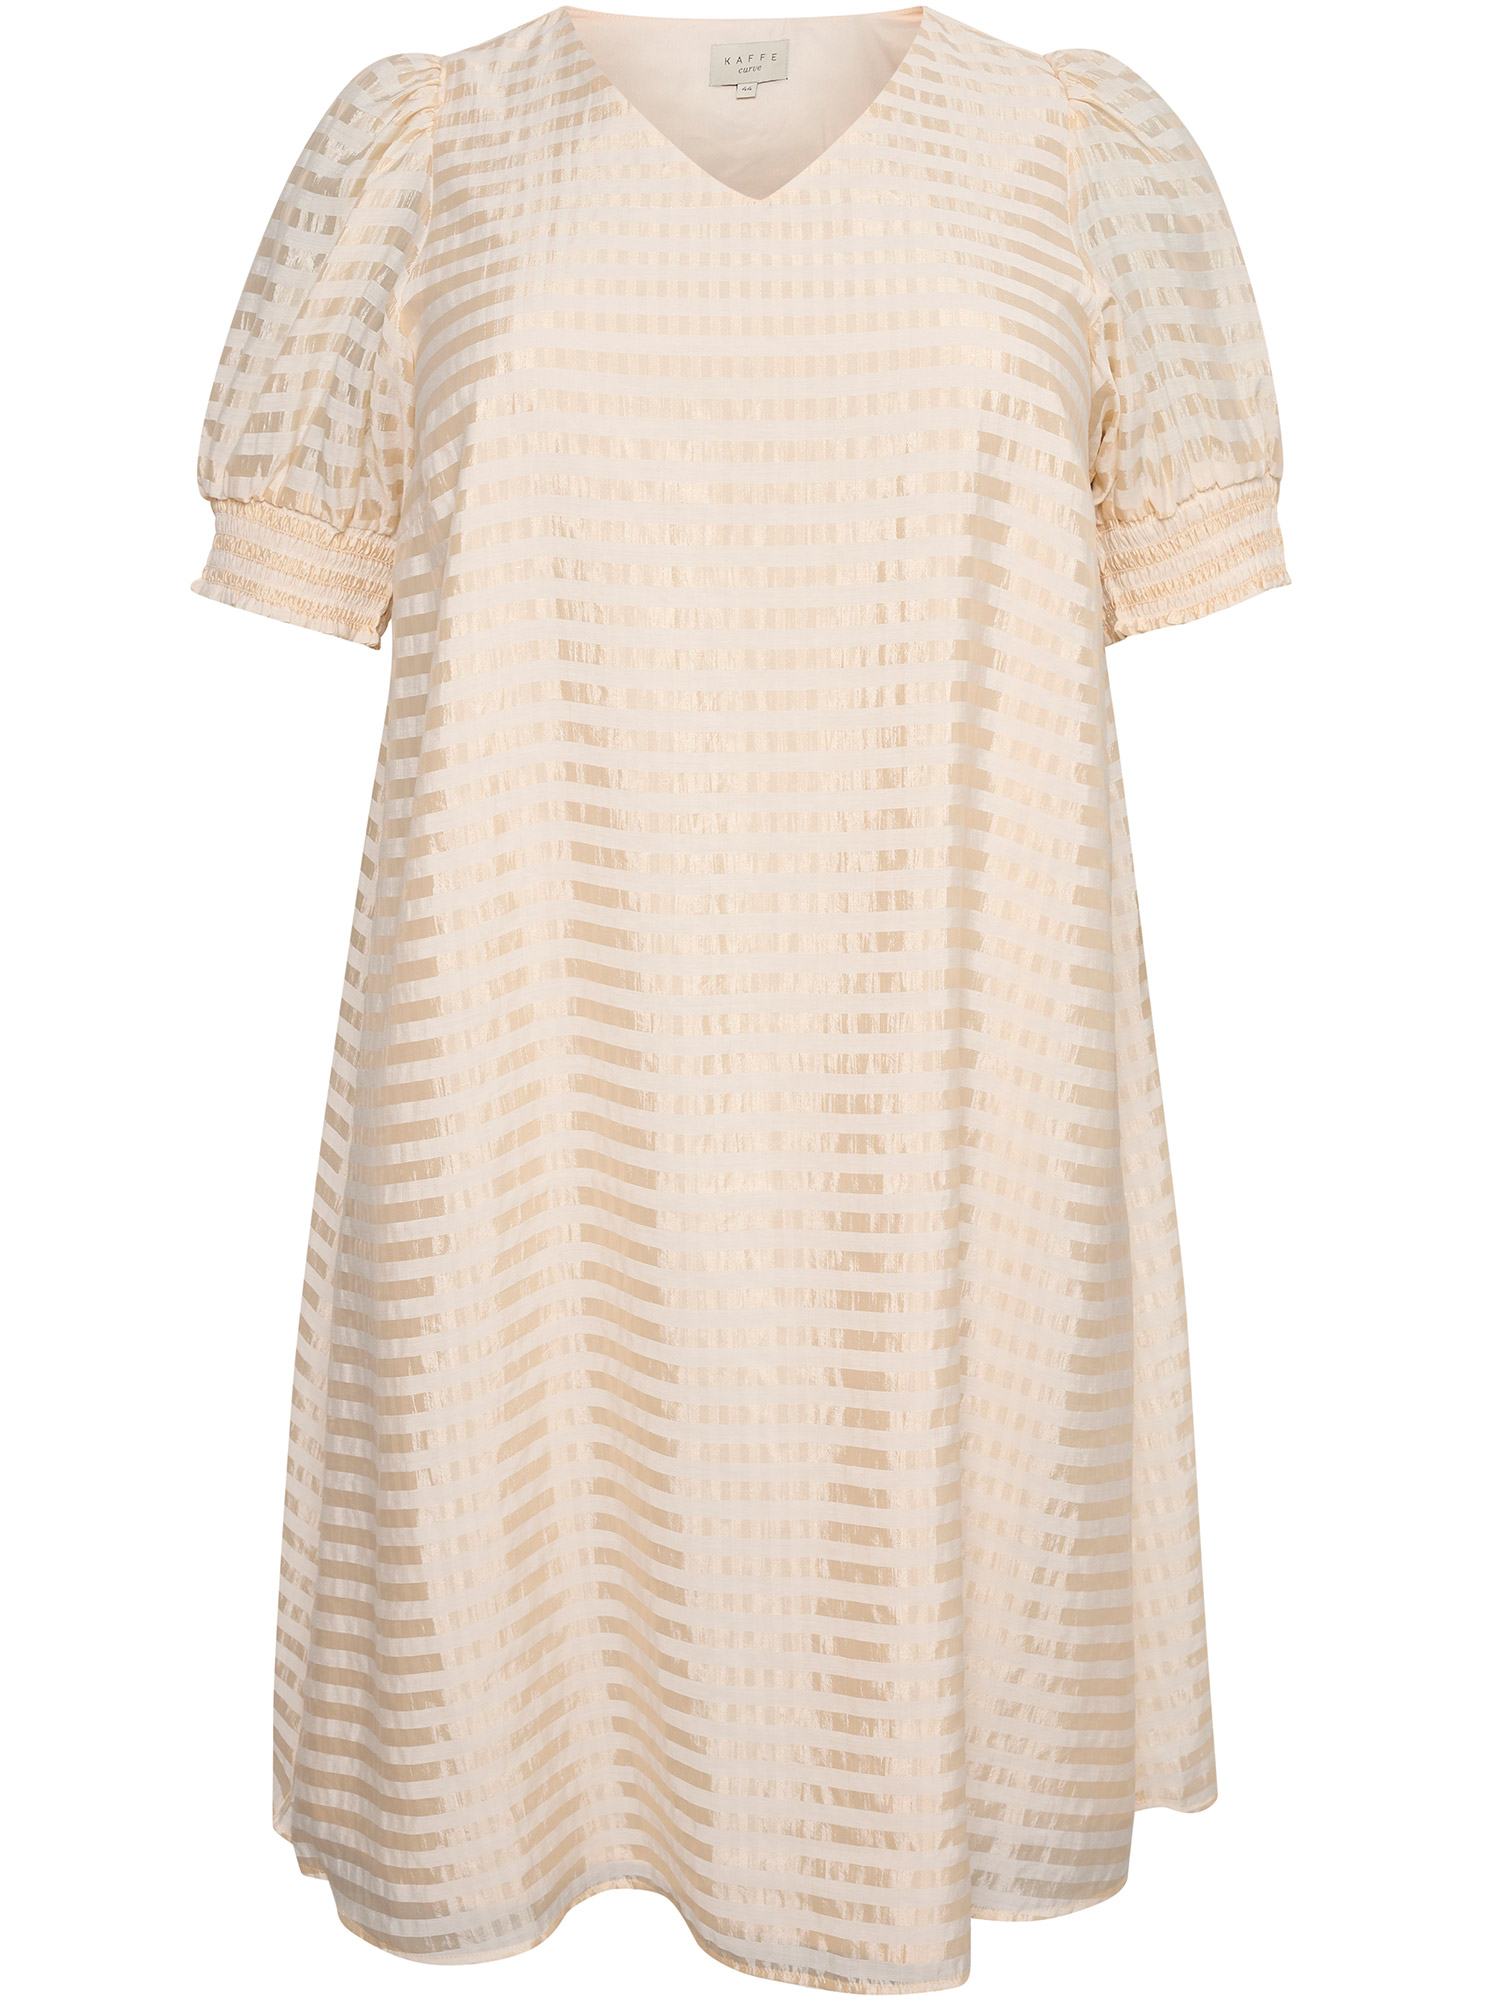 KC BERA- Smuk gylden kjole med eksklusive blanke striber fra Kaffe Curve